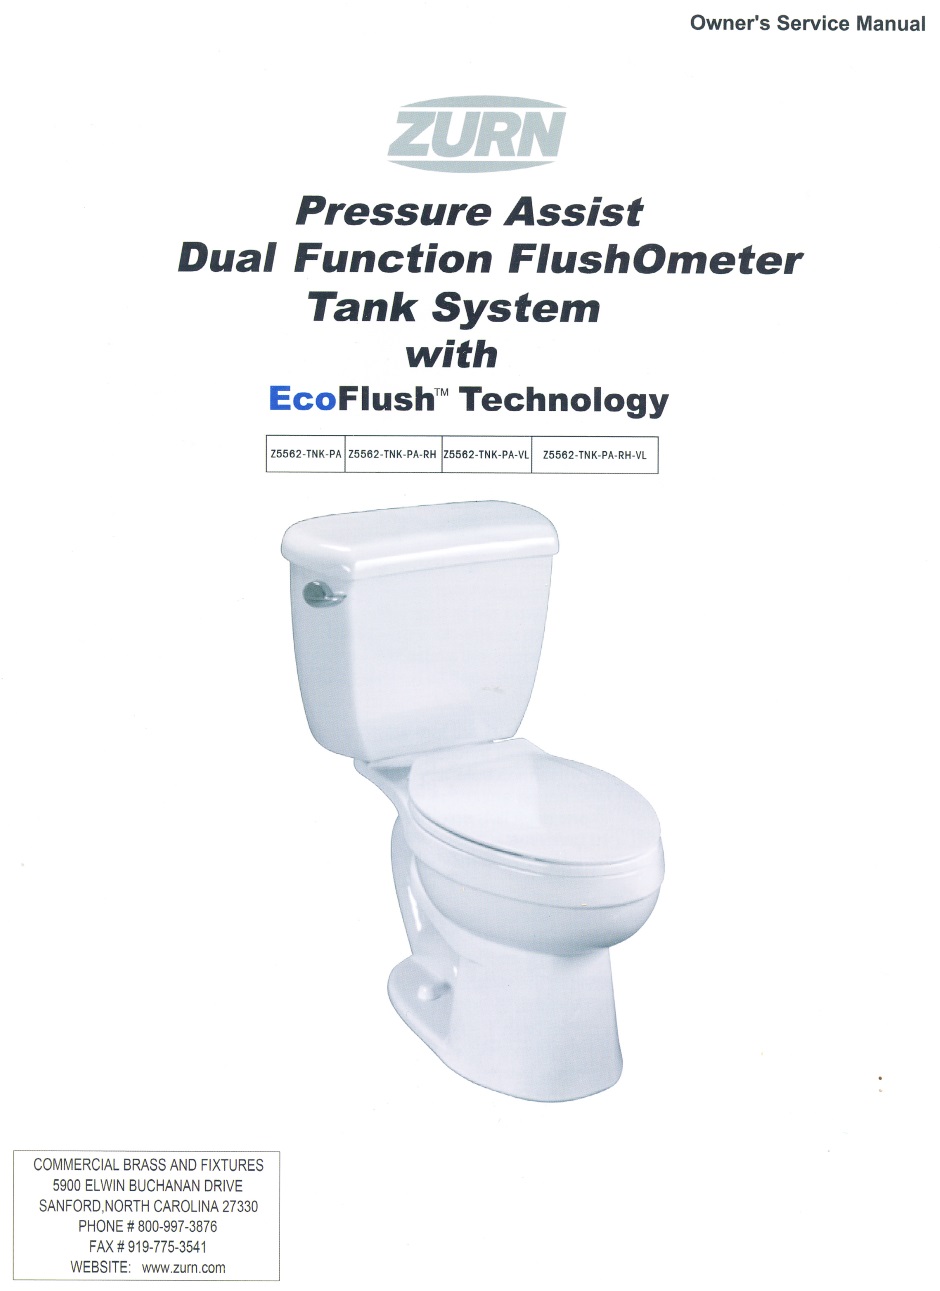 Zurn Pressure Assisted Toilet